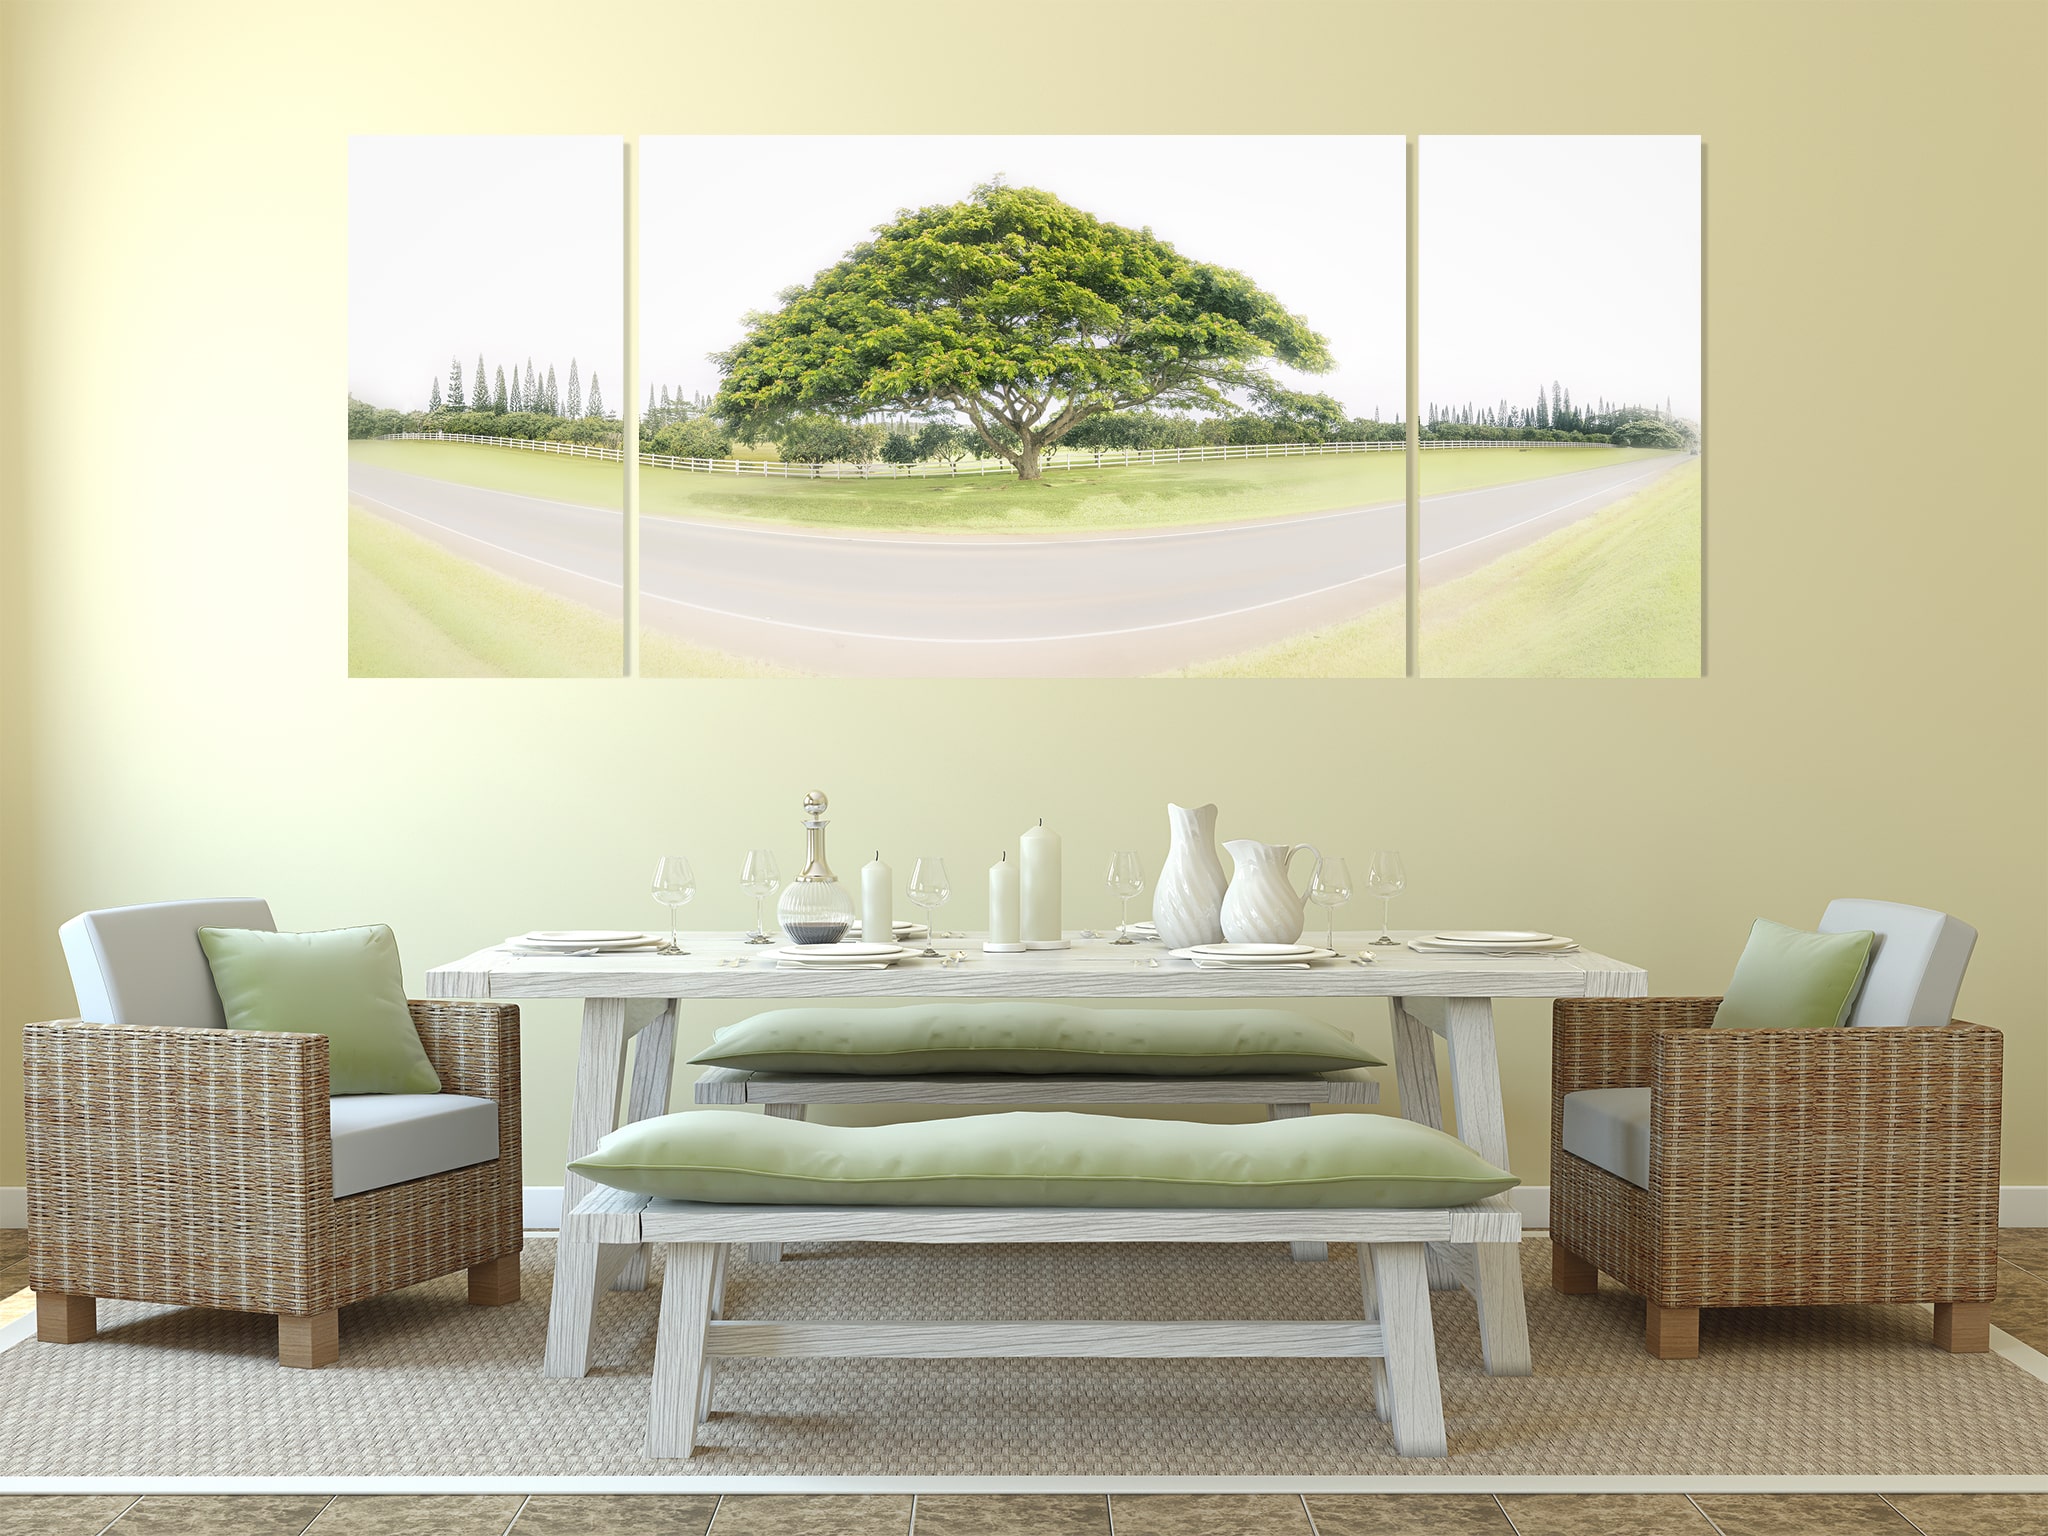 3-Panel Artwork of Tree in Room